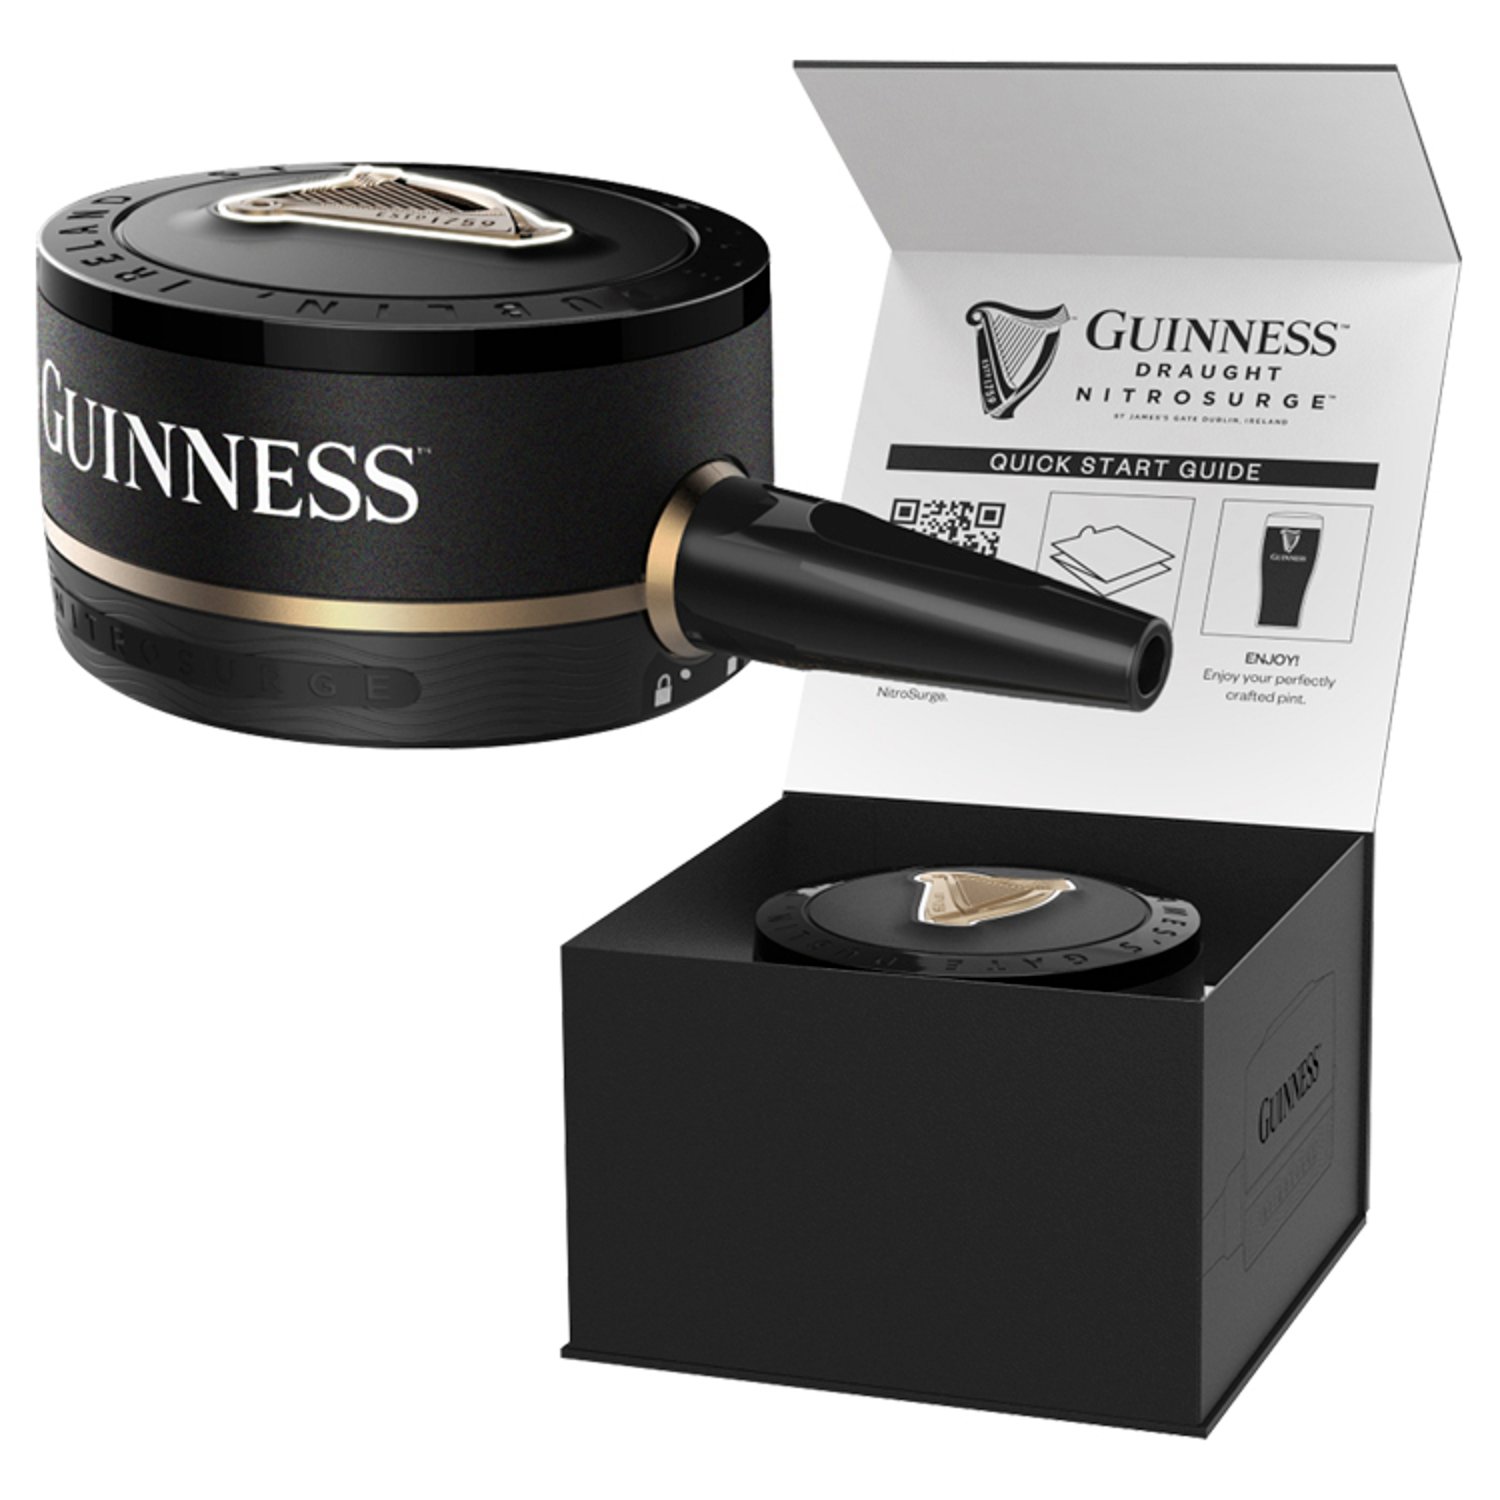 Guinness Draught Nitrosurge Unit (1 Piece)